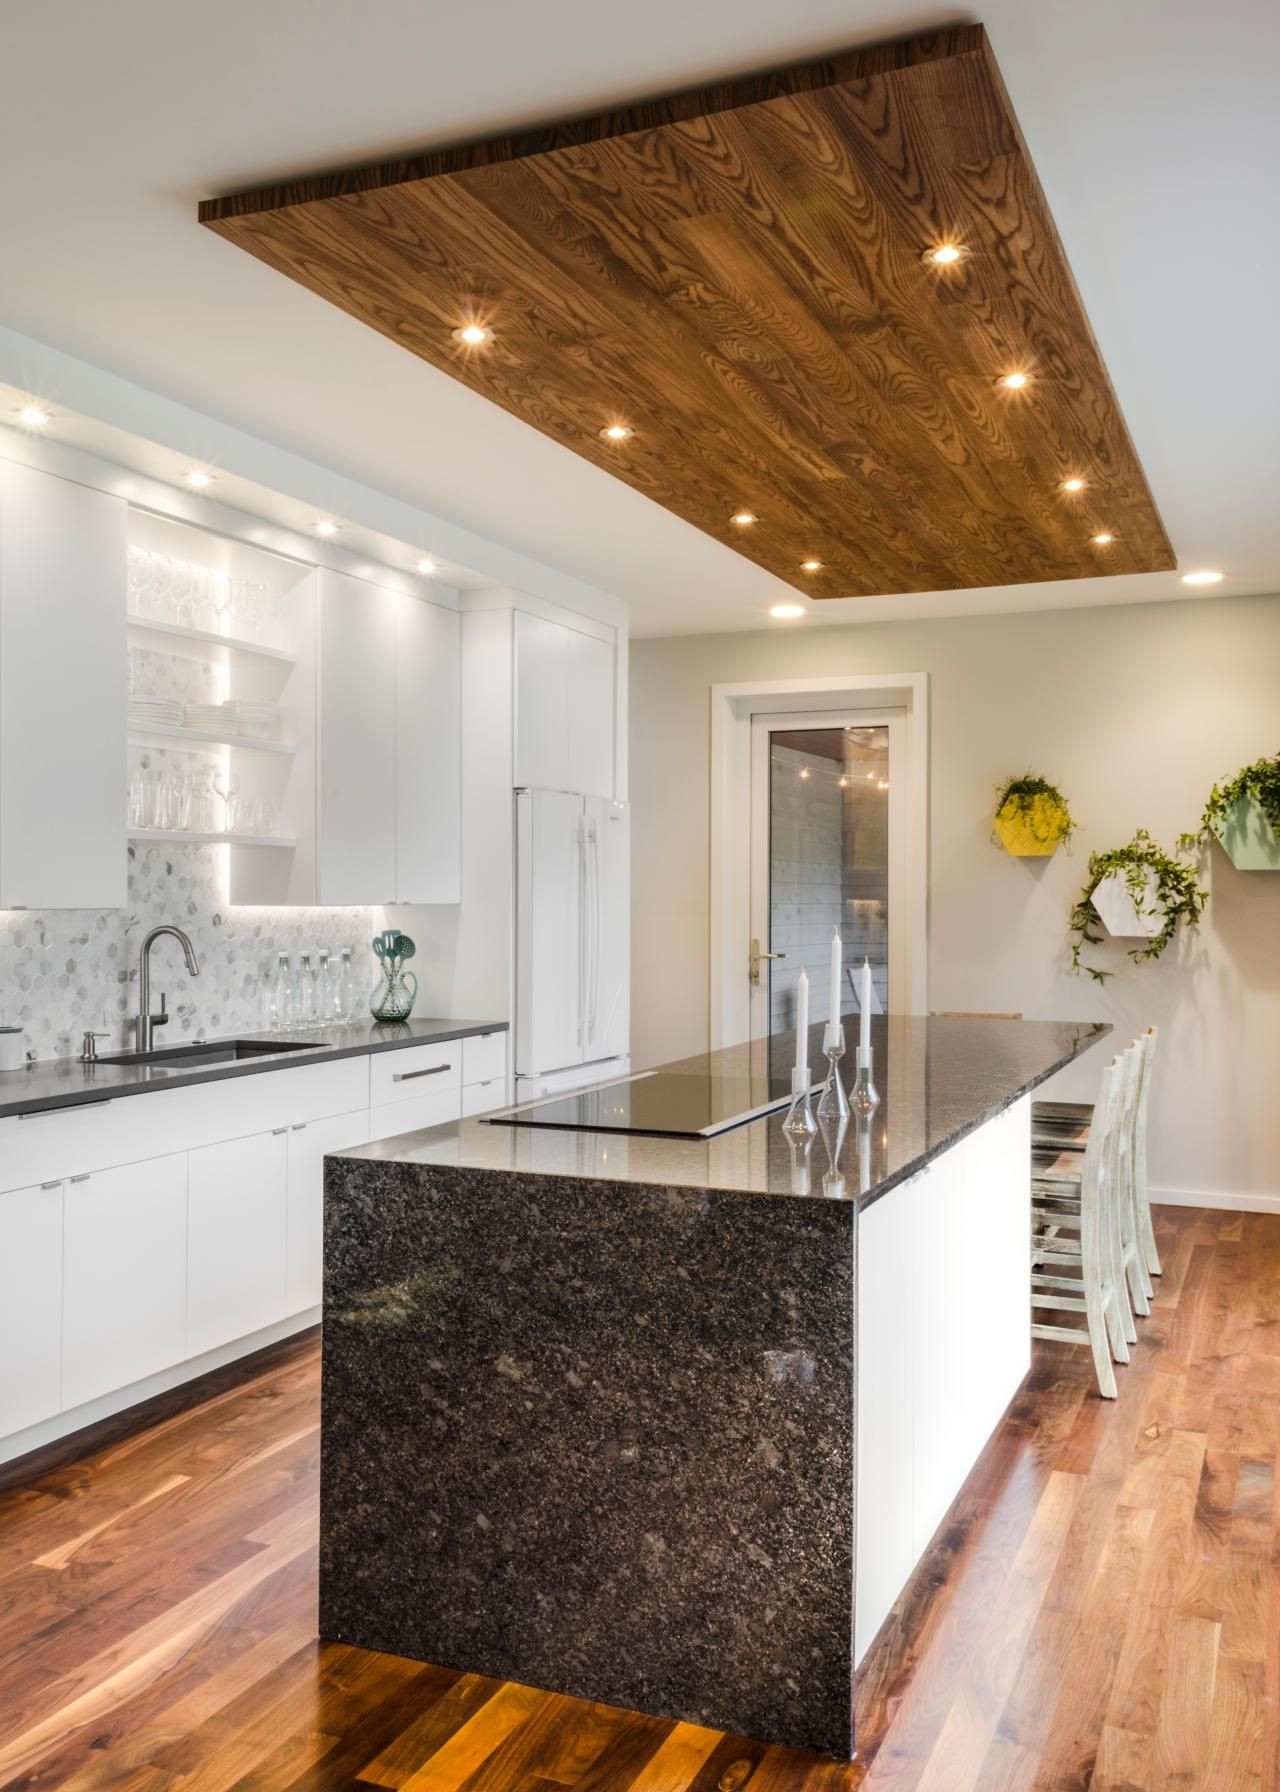 White Kitchen With Wood Ceiling | Kitchen Ceiling Design, House within Kitchen Ceiling Design